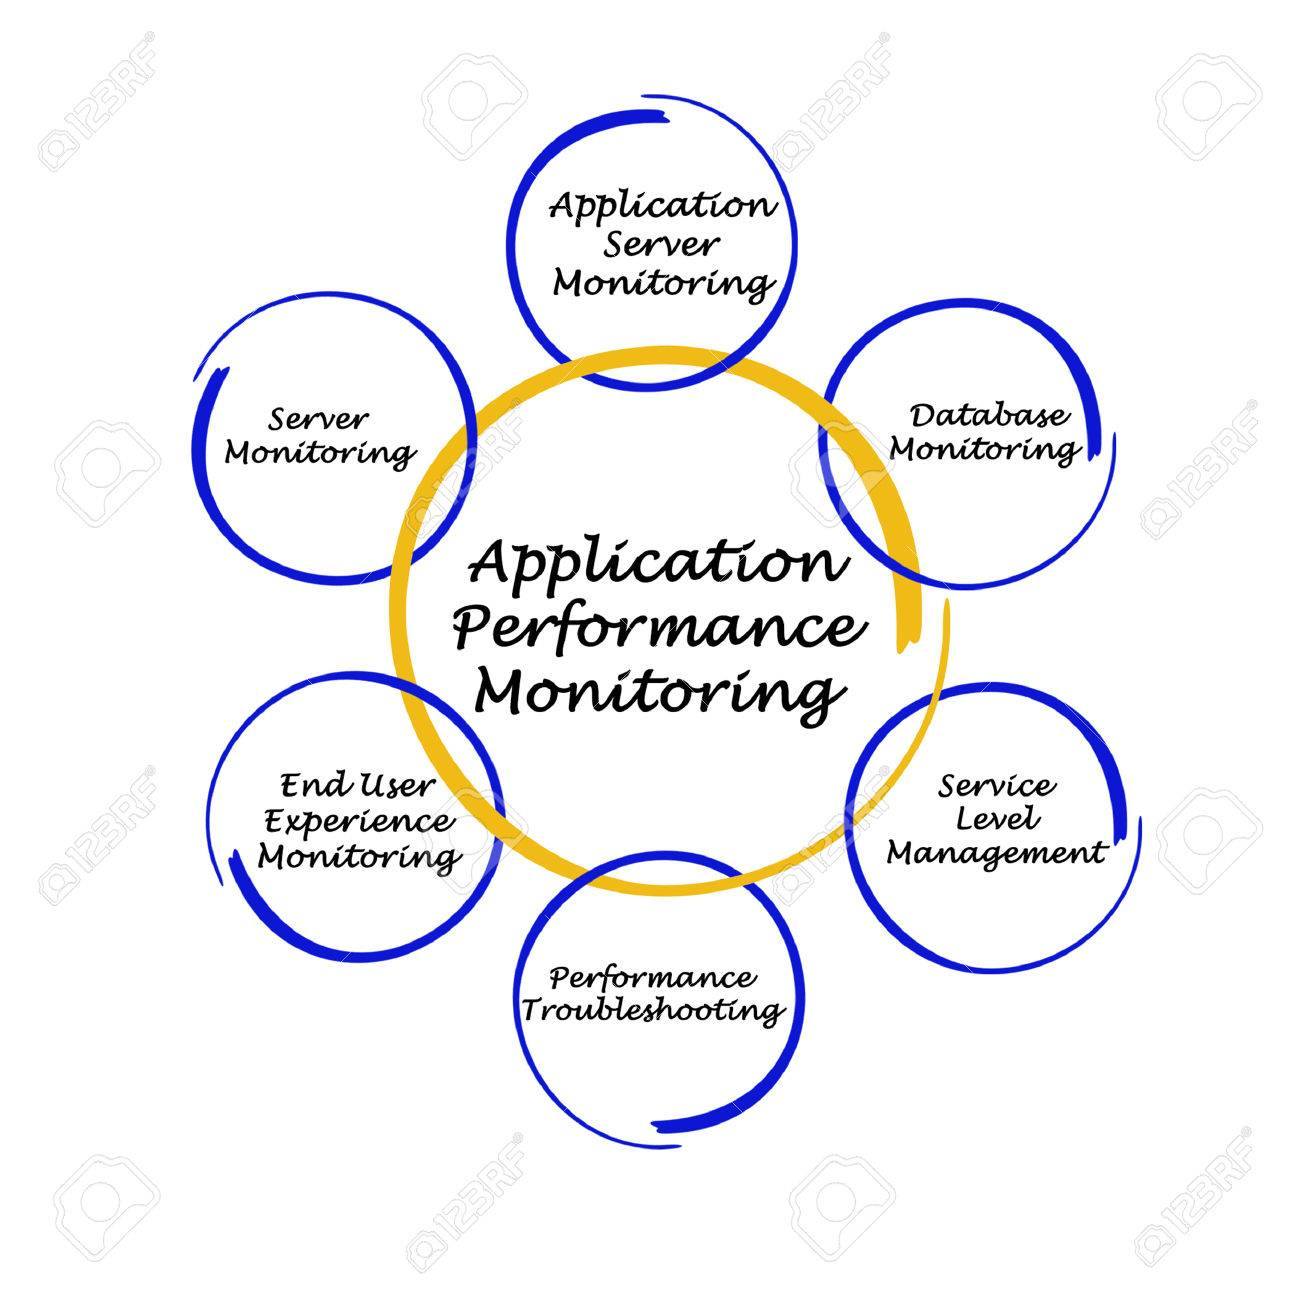 Application Performance Monitoring Software Market'